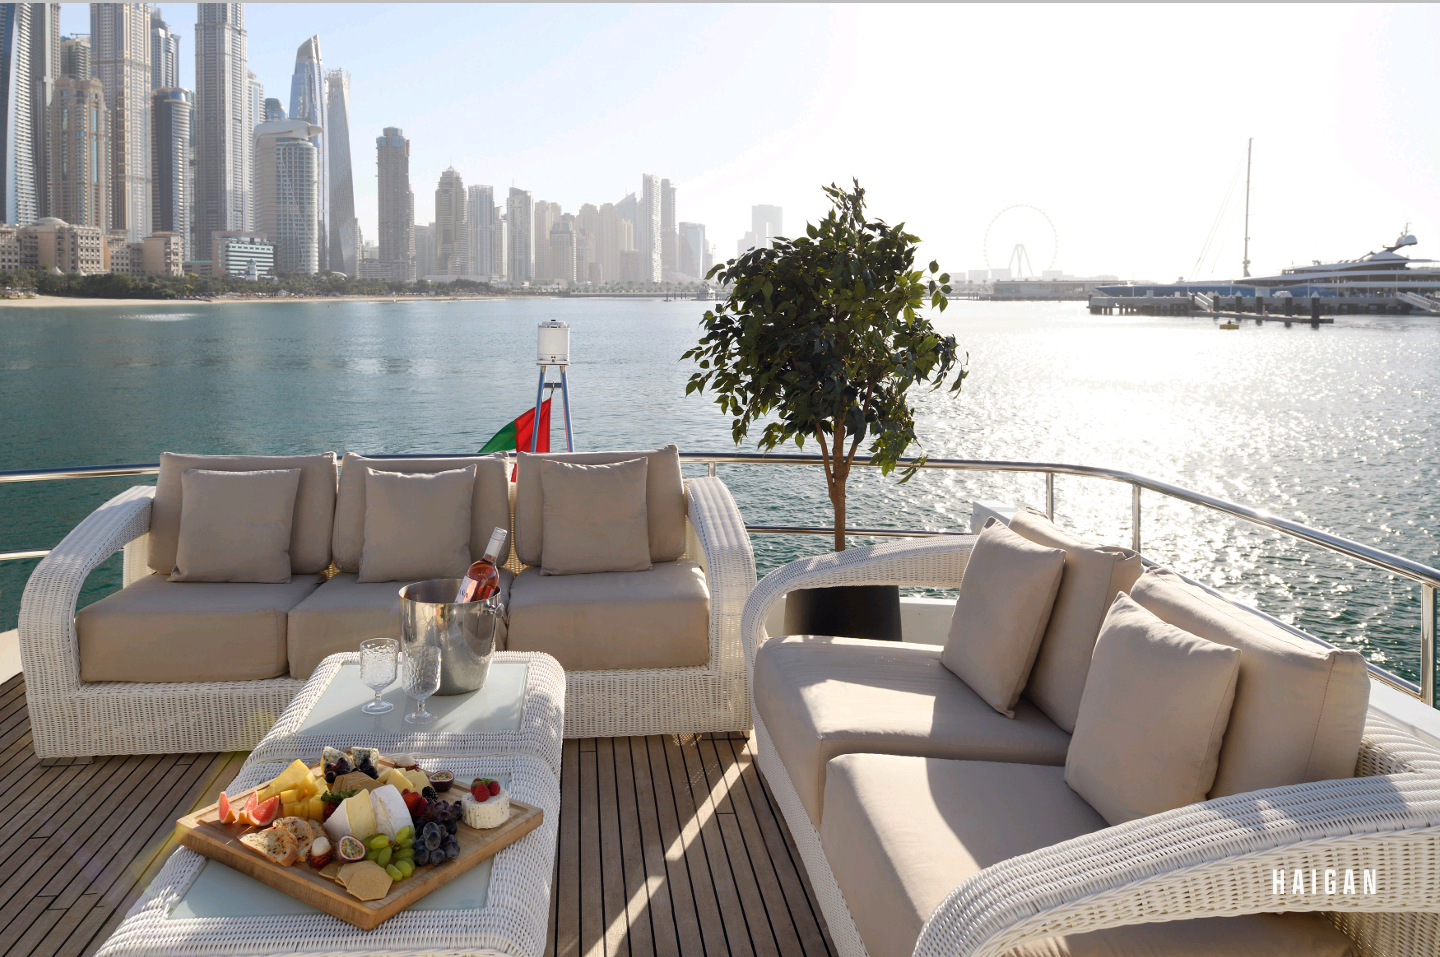 Haigan Yacht 92ft - Luxury Yacht Charter Dubai, 25 pax - Dubai Marina